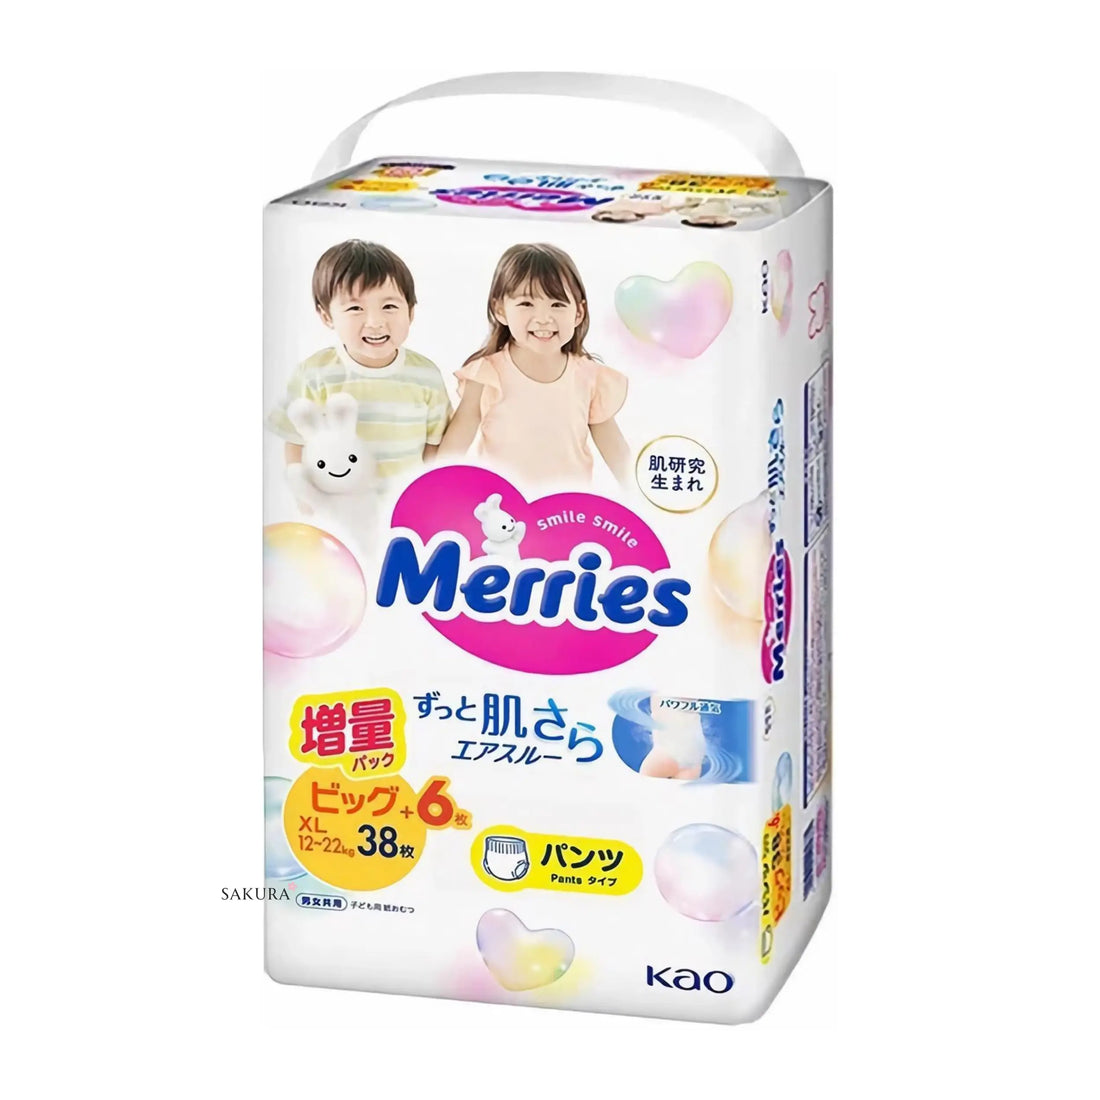 Merries Nappies JAPAN Pants XL (12-22kg) 44pcs Value Pack